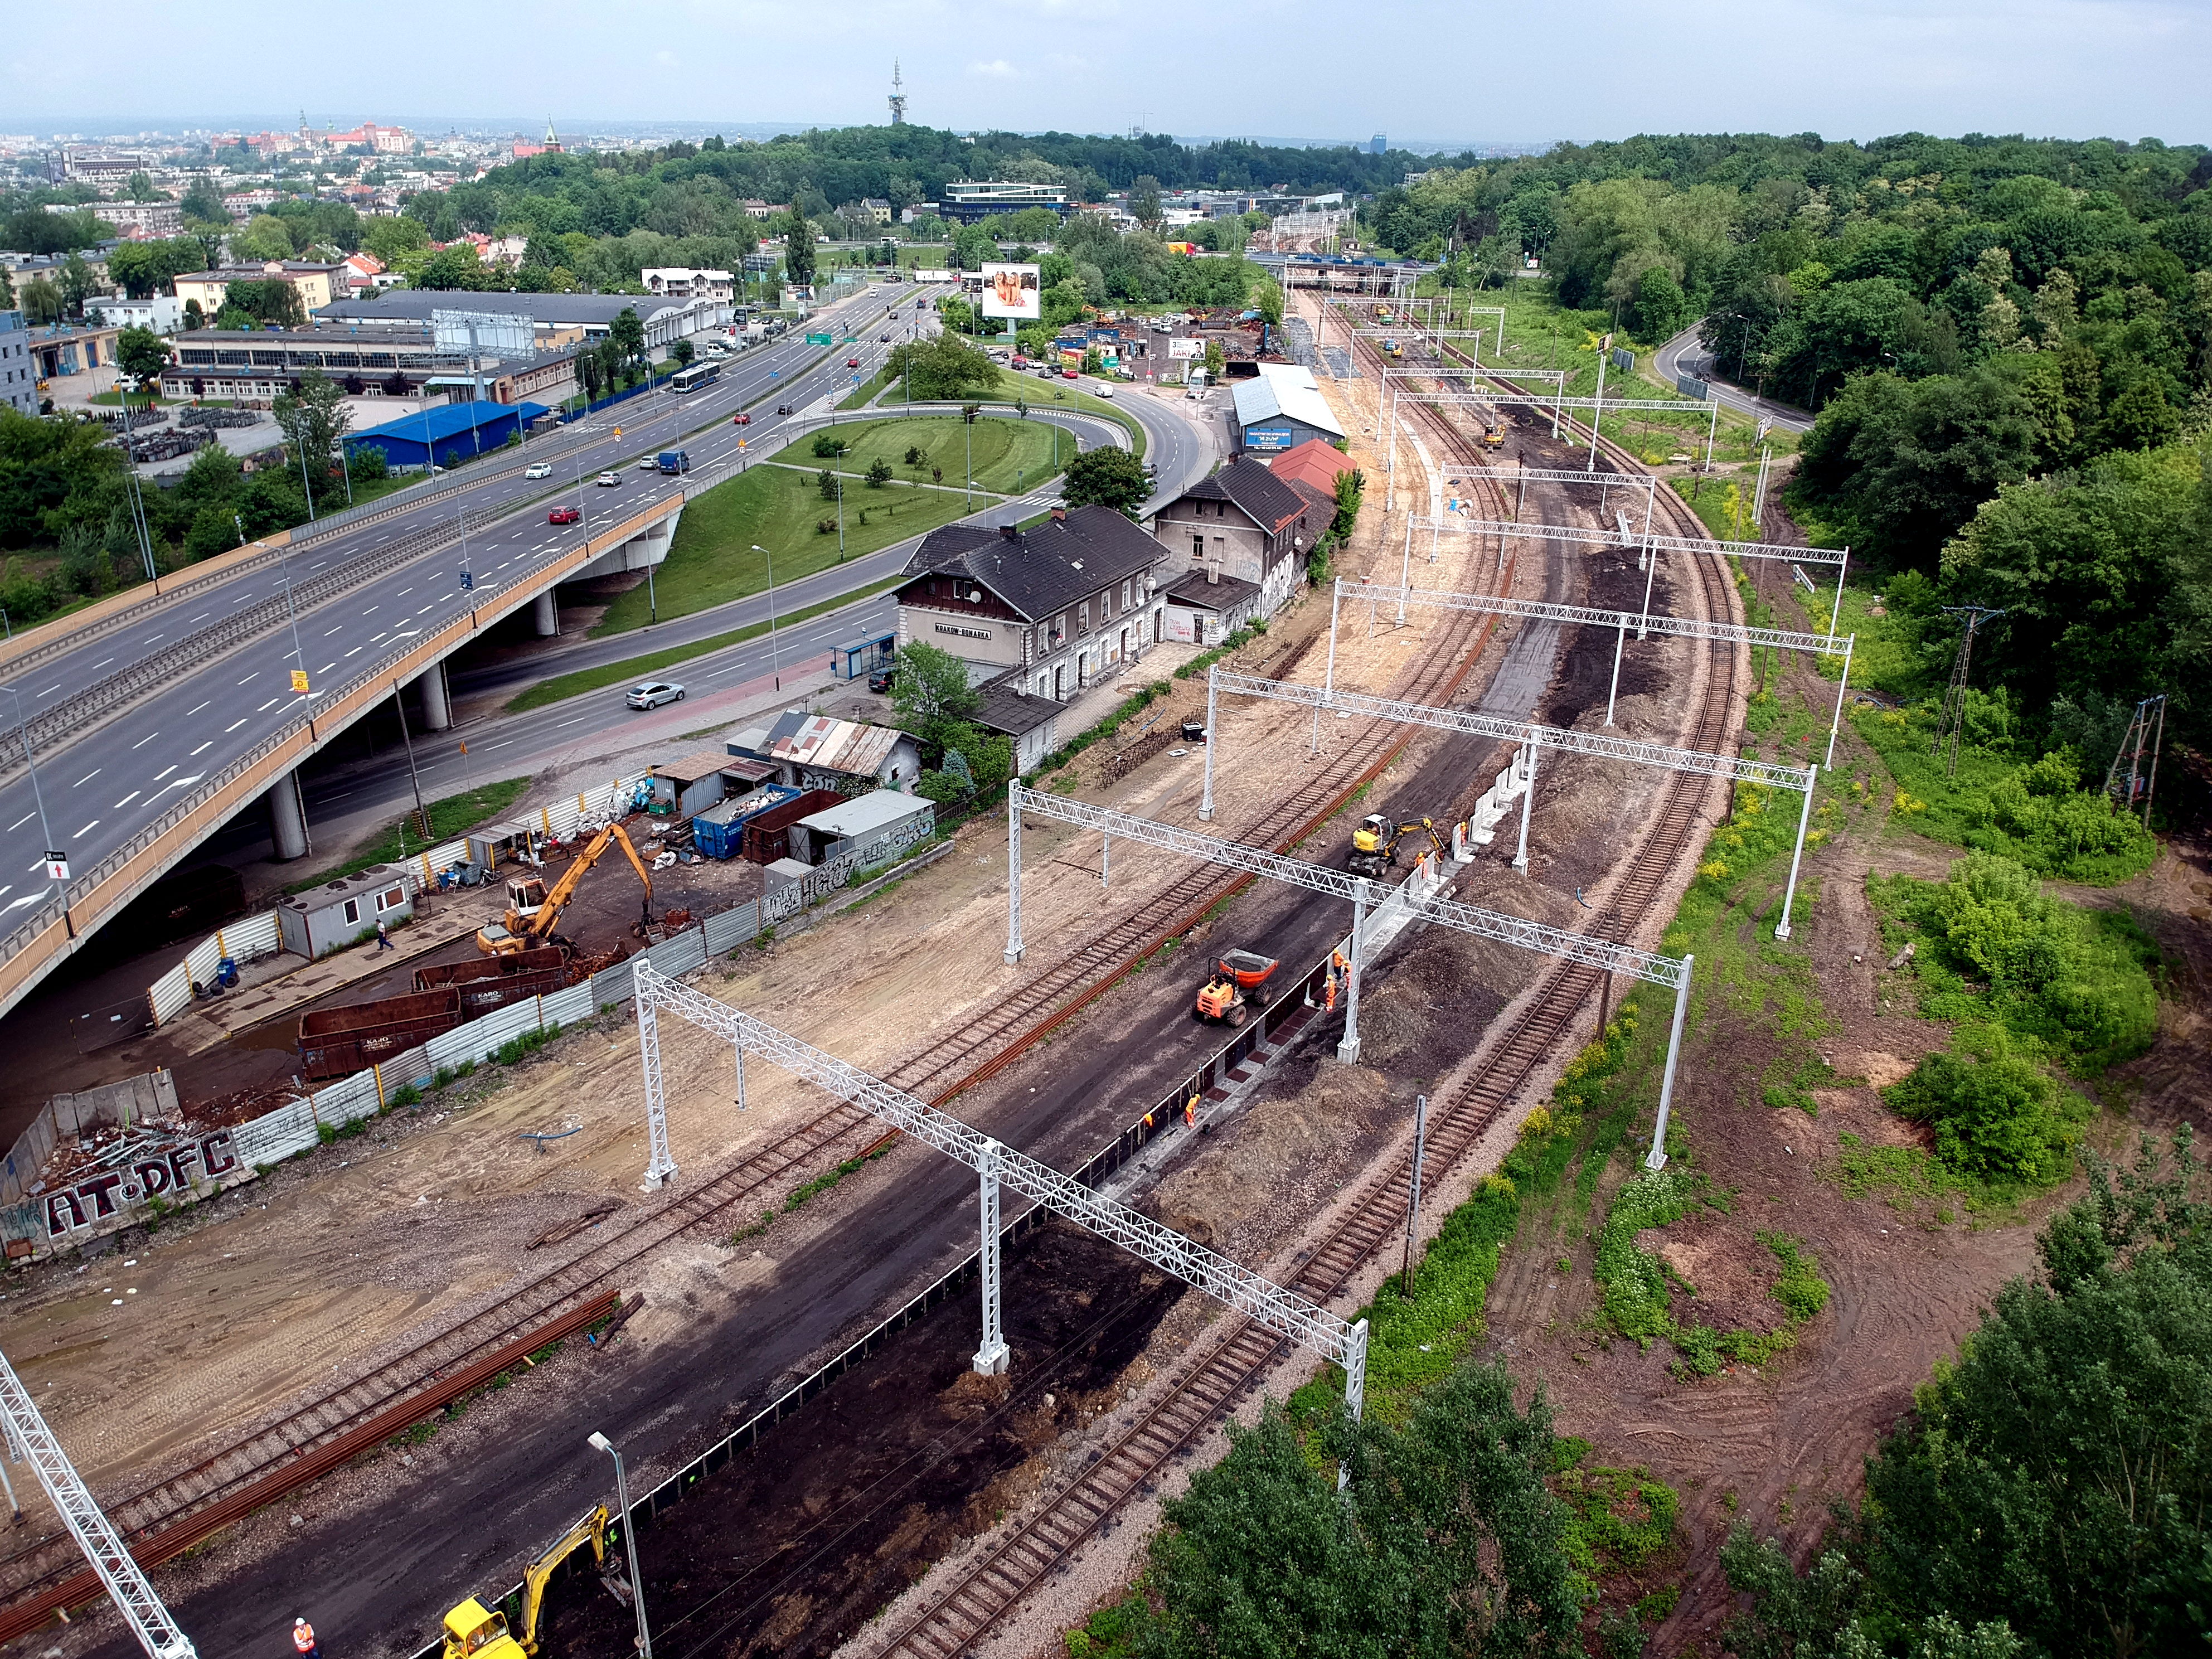 Prace budowlane na torze kolejowym, Kraków - Železničné stavby